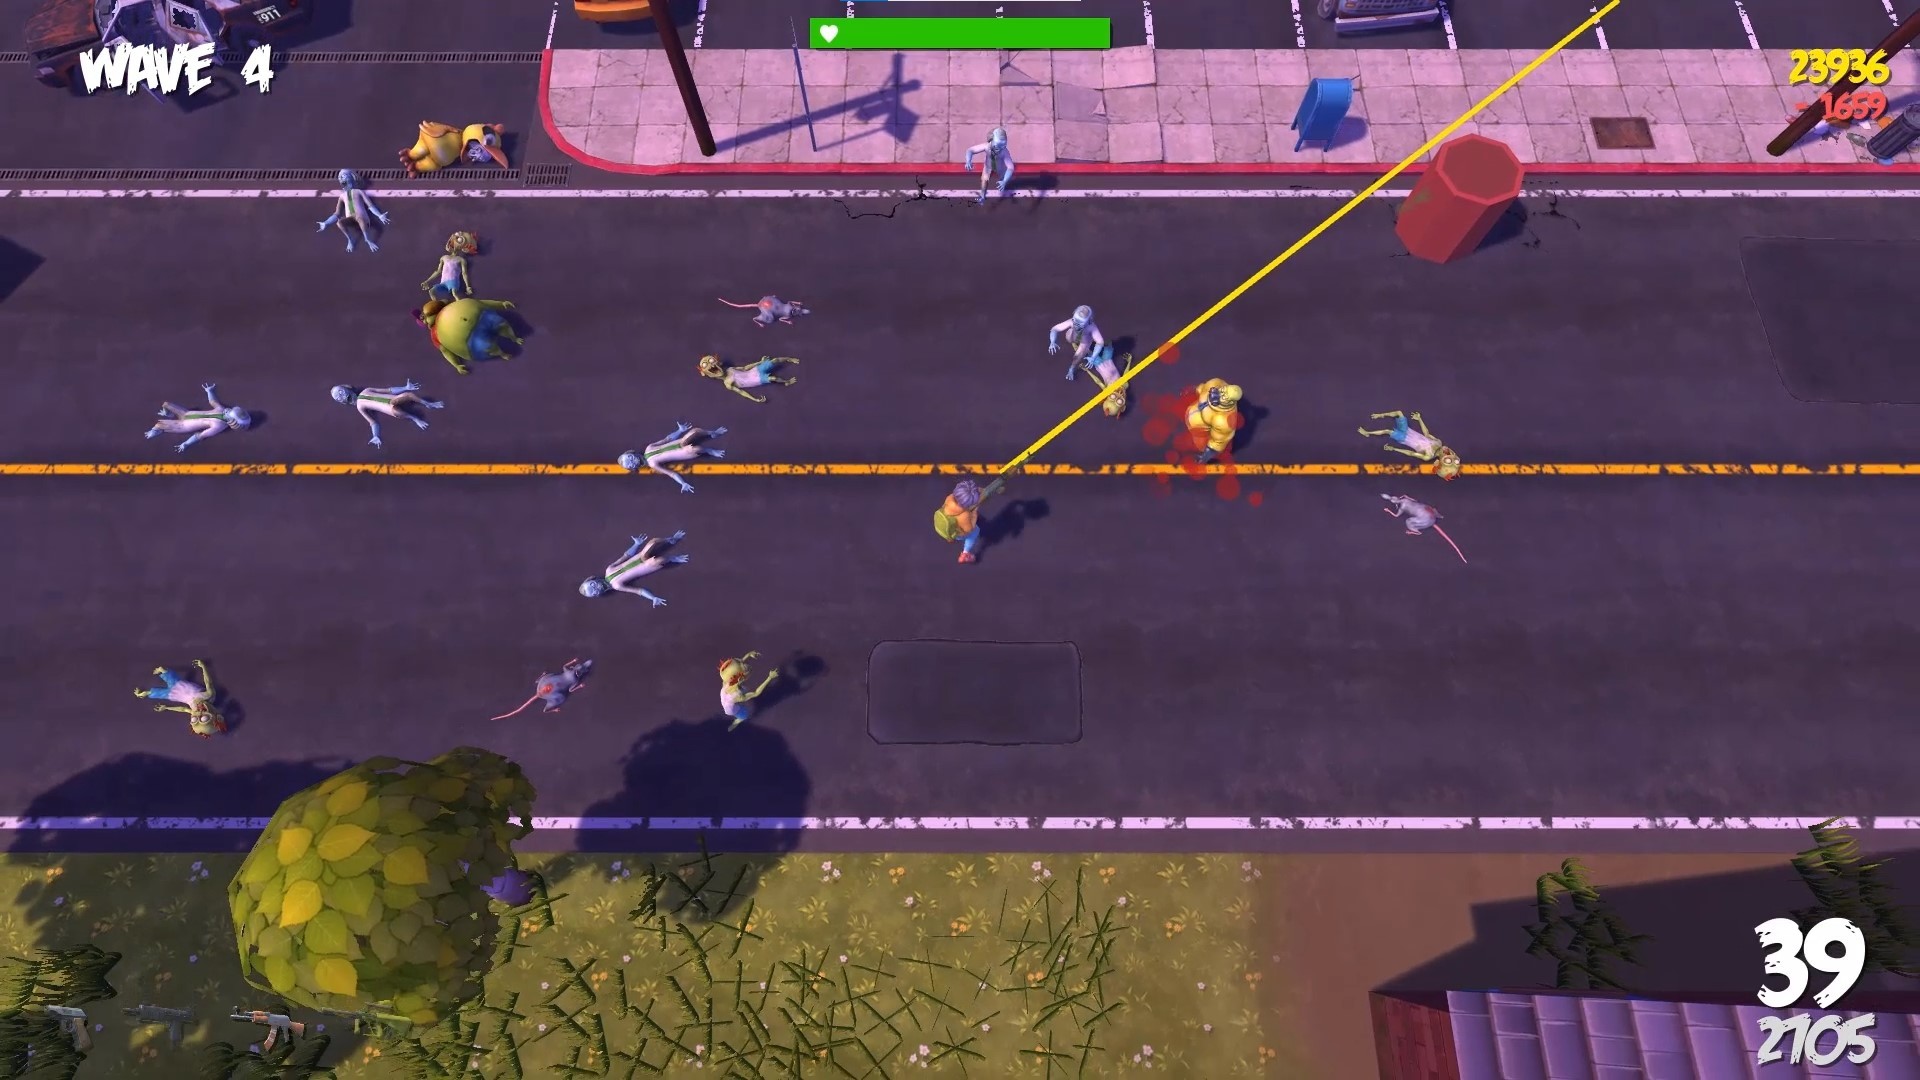 Zombie In Town screenshot